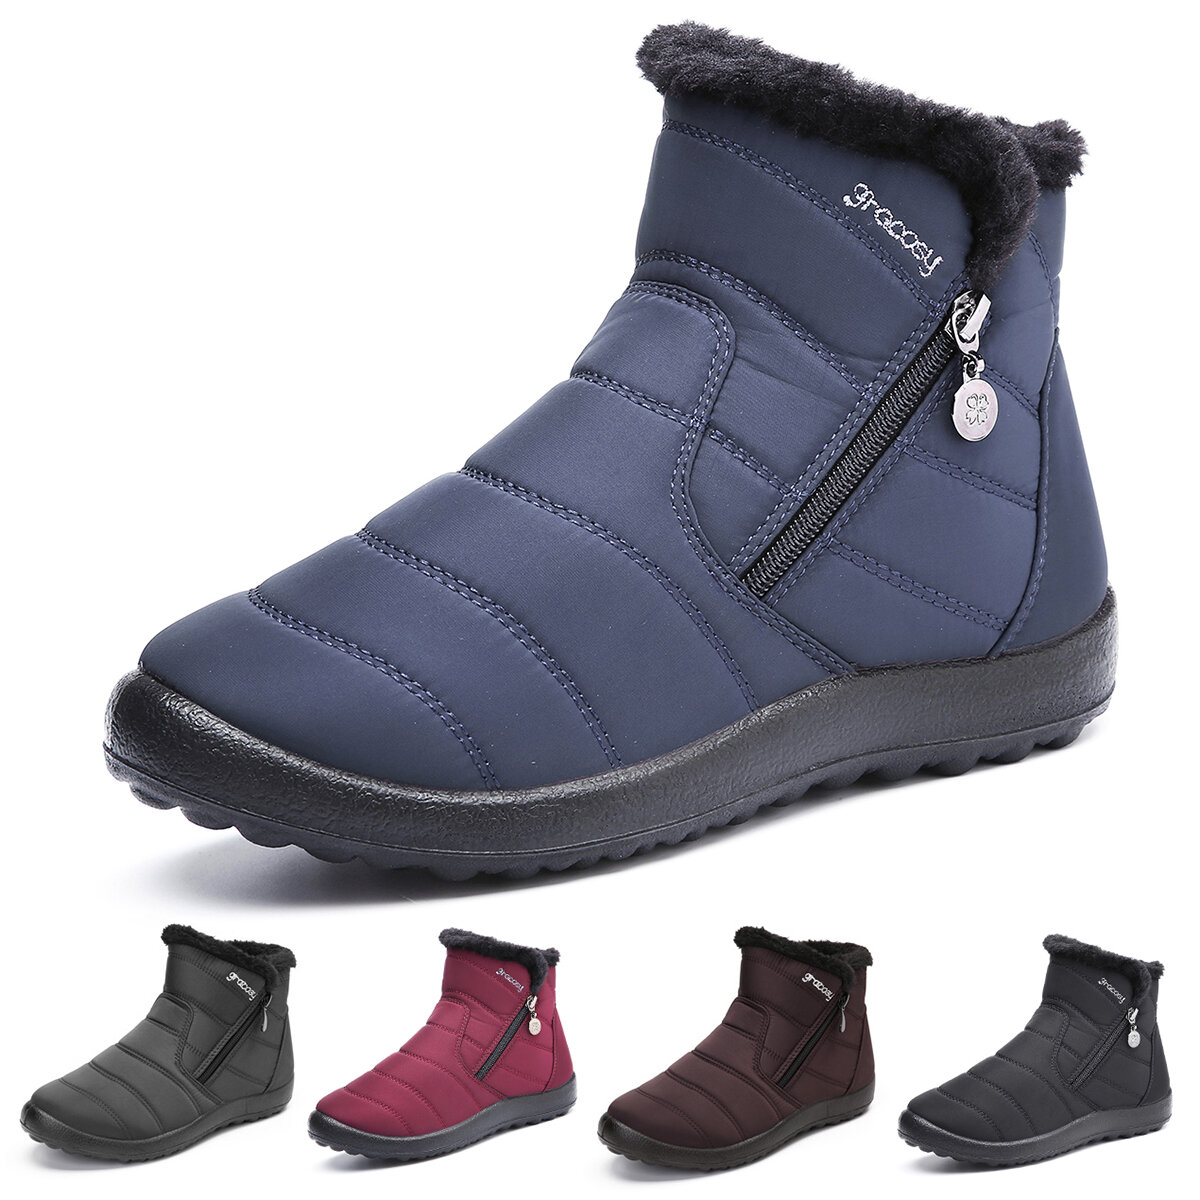 Gracosy Warm Snow Boots Women's Winter Boots Anti-slip Waterproof Fur Lining Outdoor...